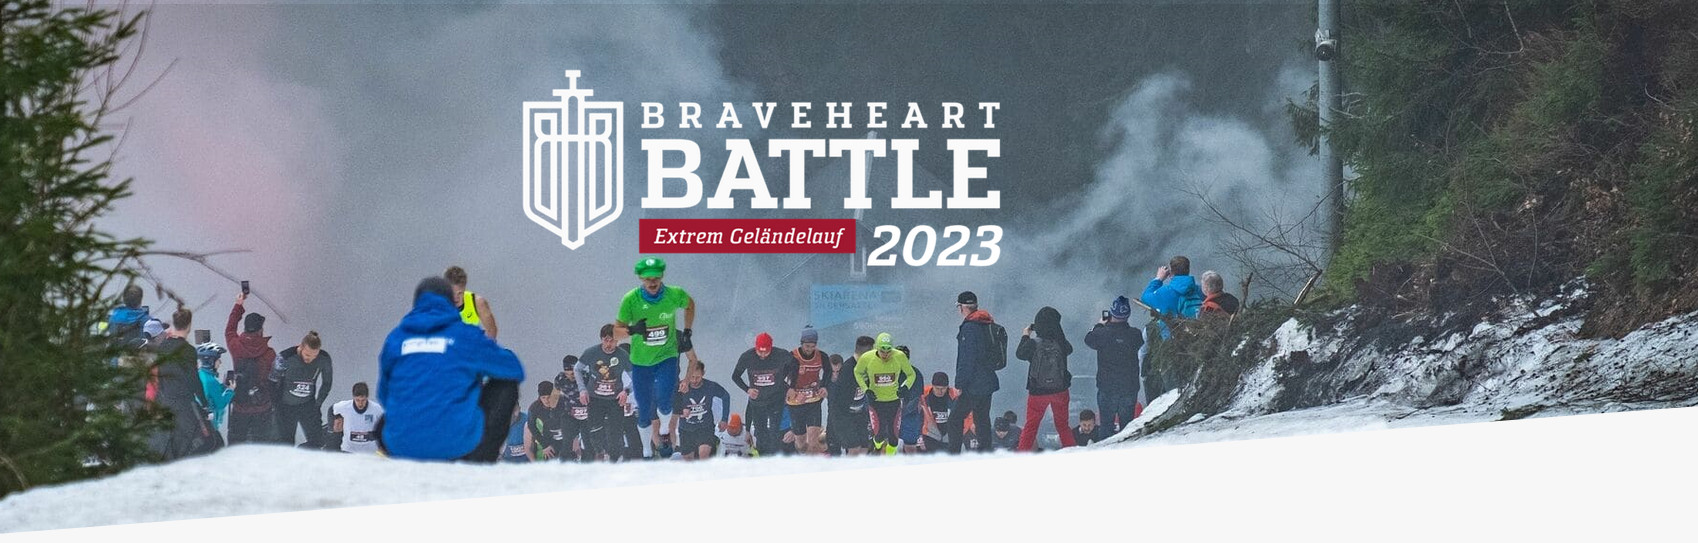 Event banner of Braveheart Battle 2022